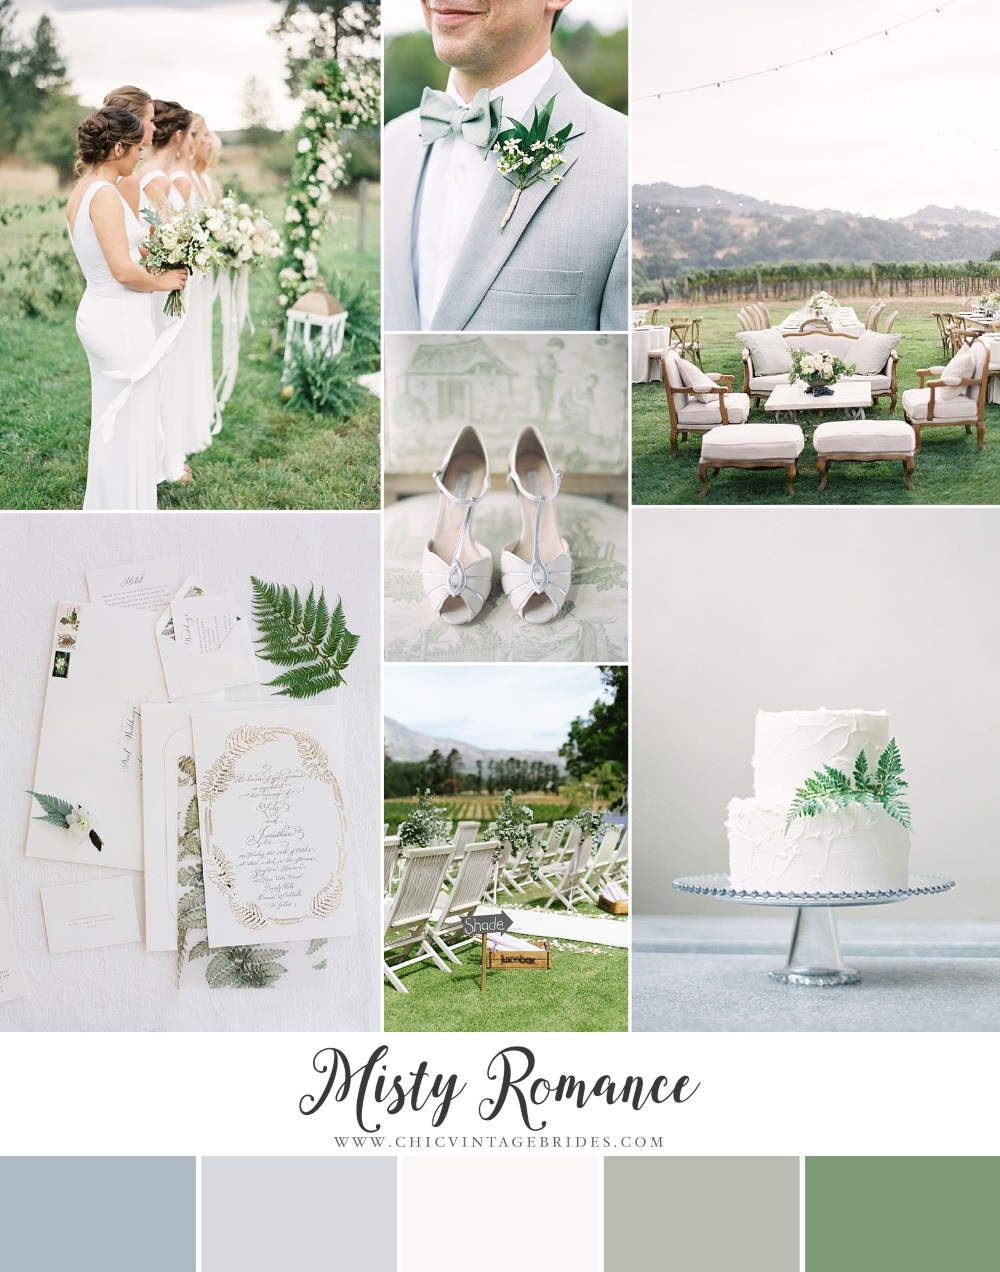 Misty Romance - Elegant Wedding Inspiration in Soft Shades of Grey & Green